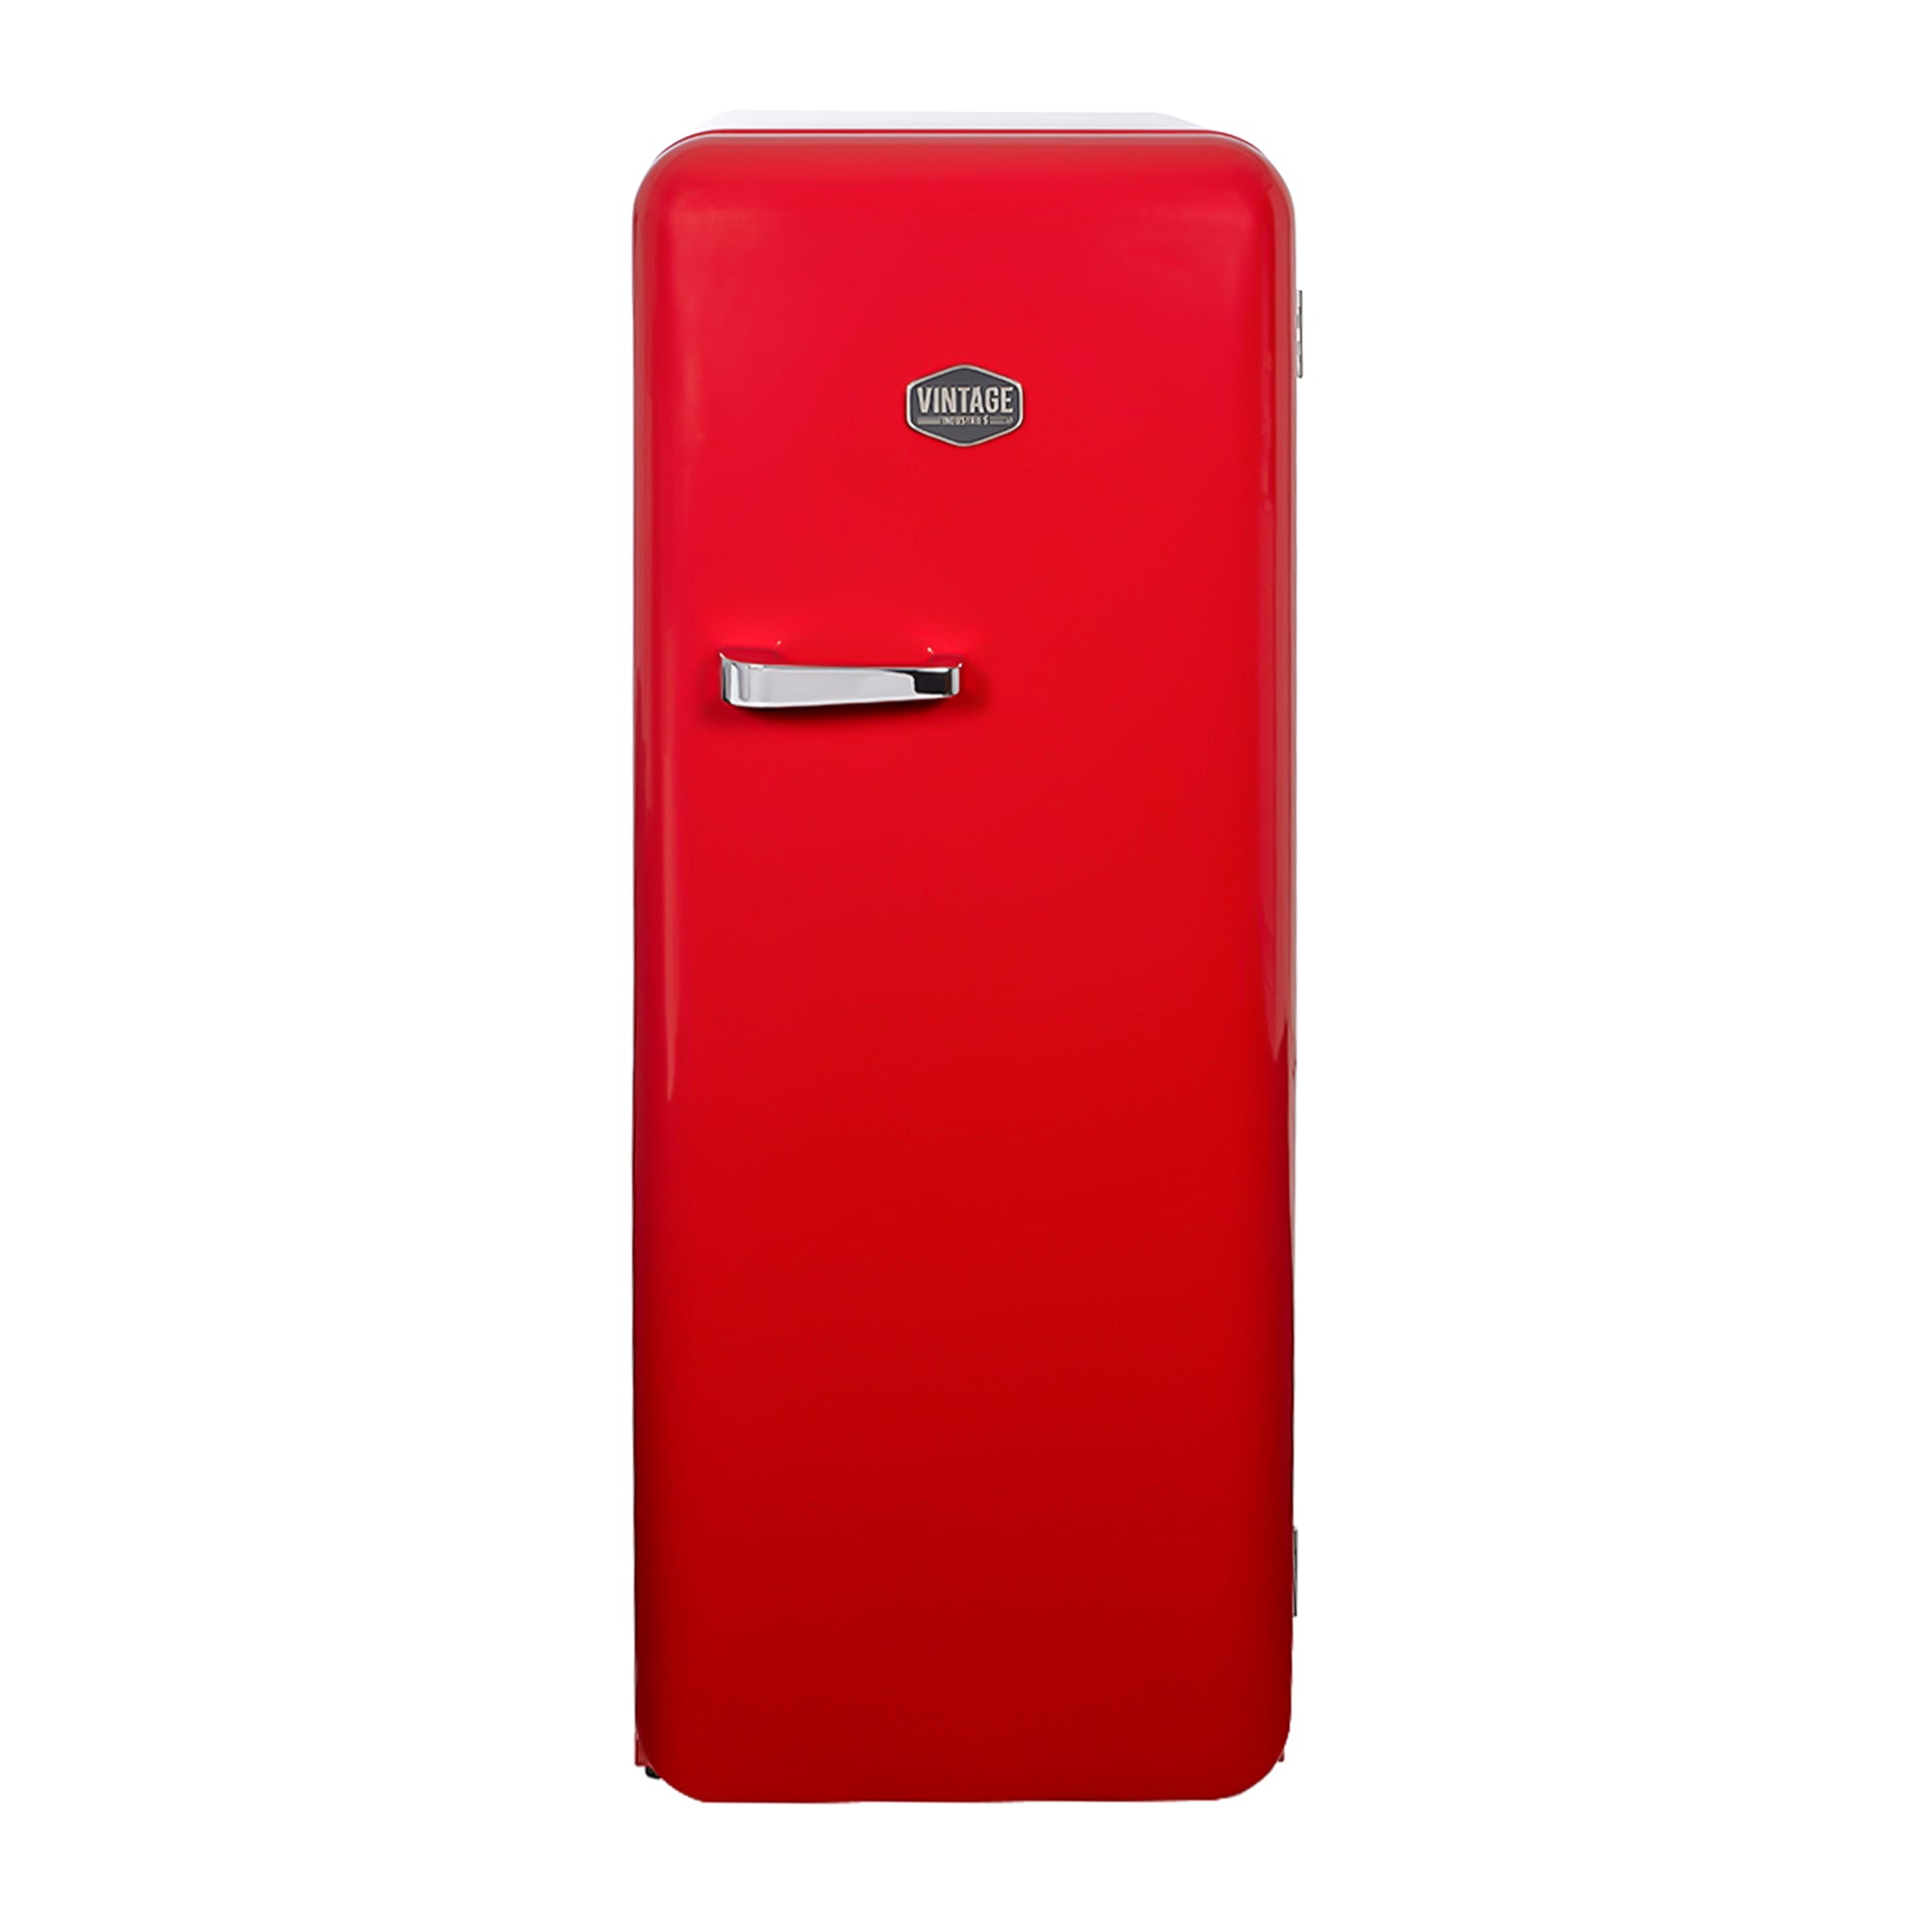 Retro køleskab - rød